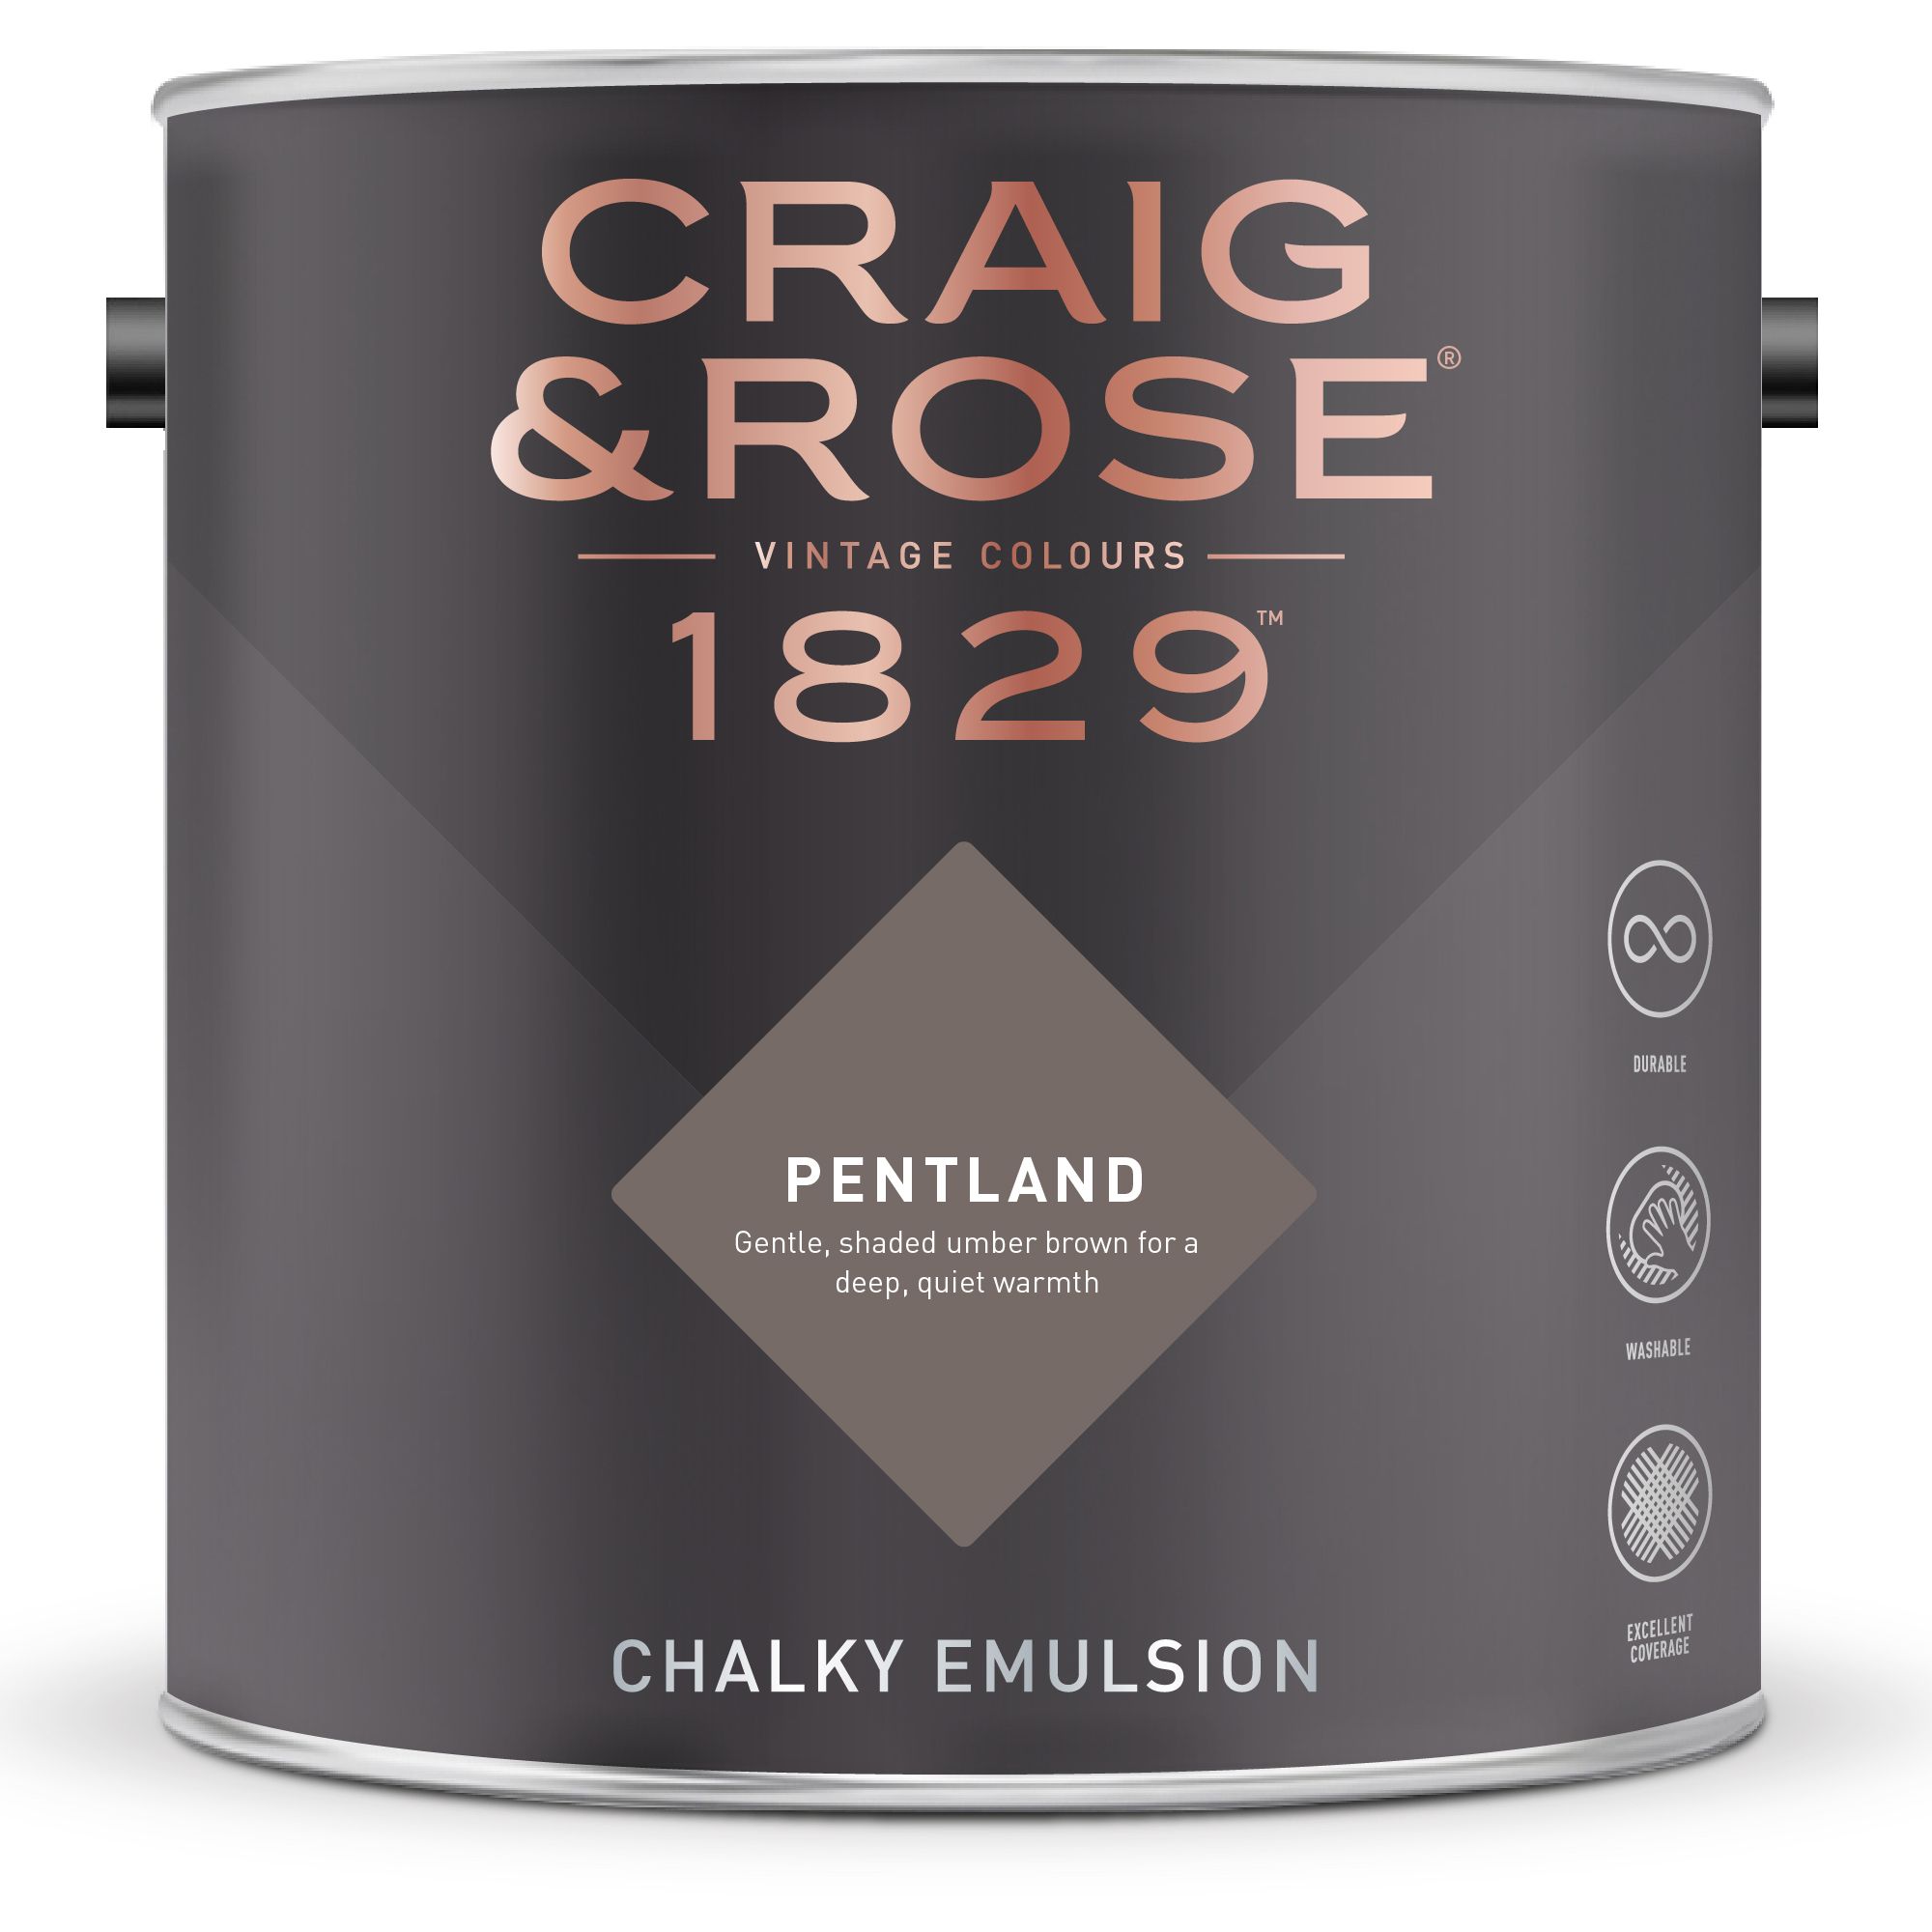 Craig & Rose 1829 Pentland  Chalky Emulsion paint, 2.5L